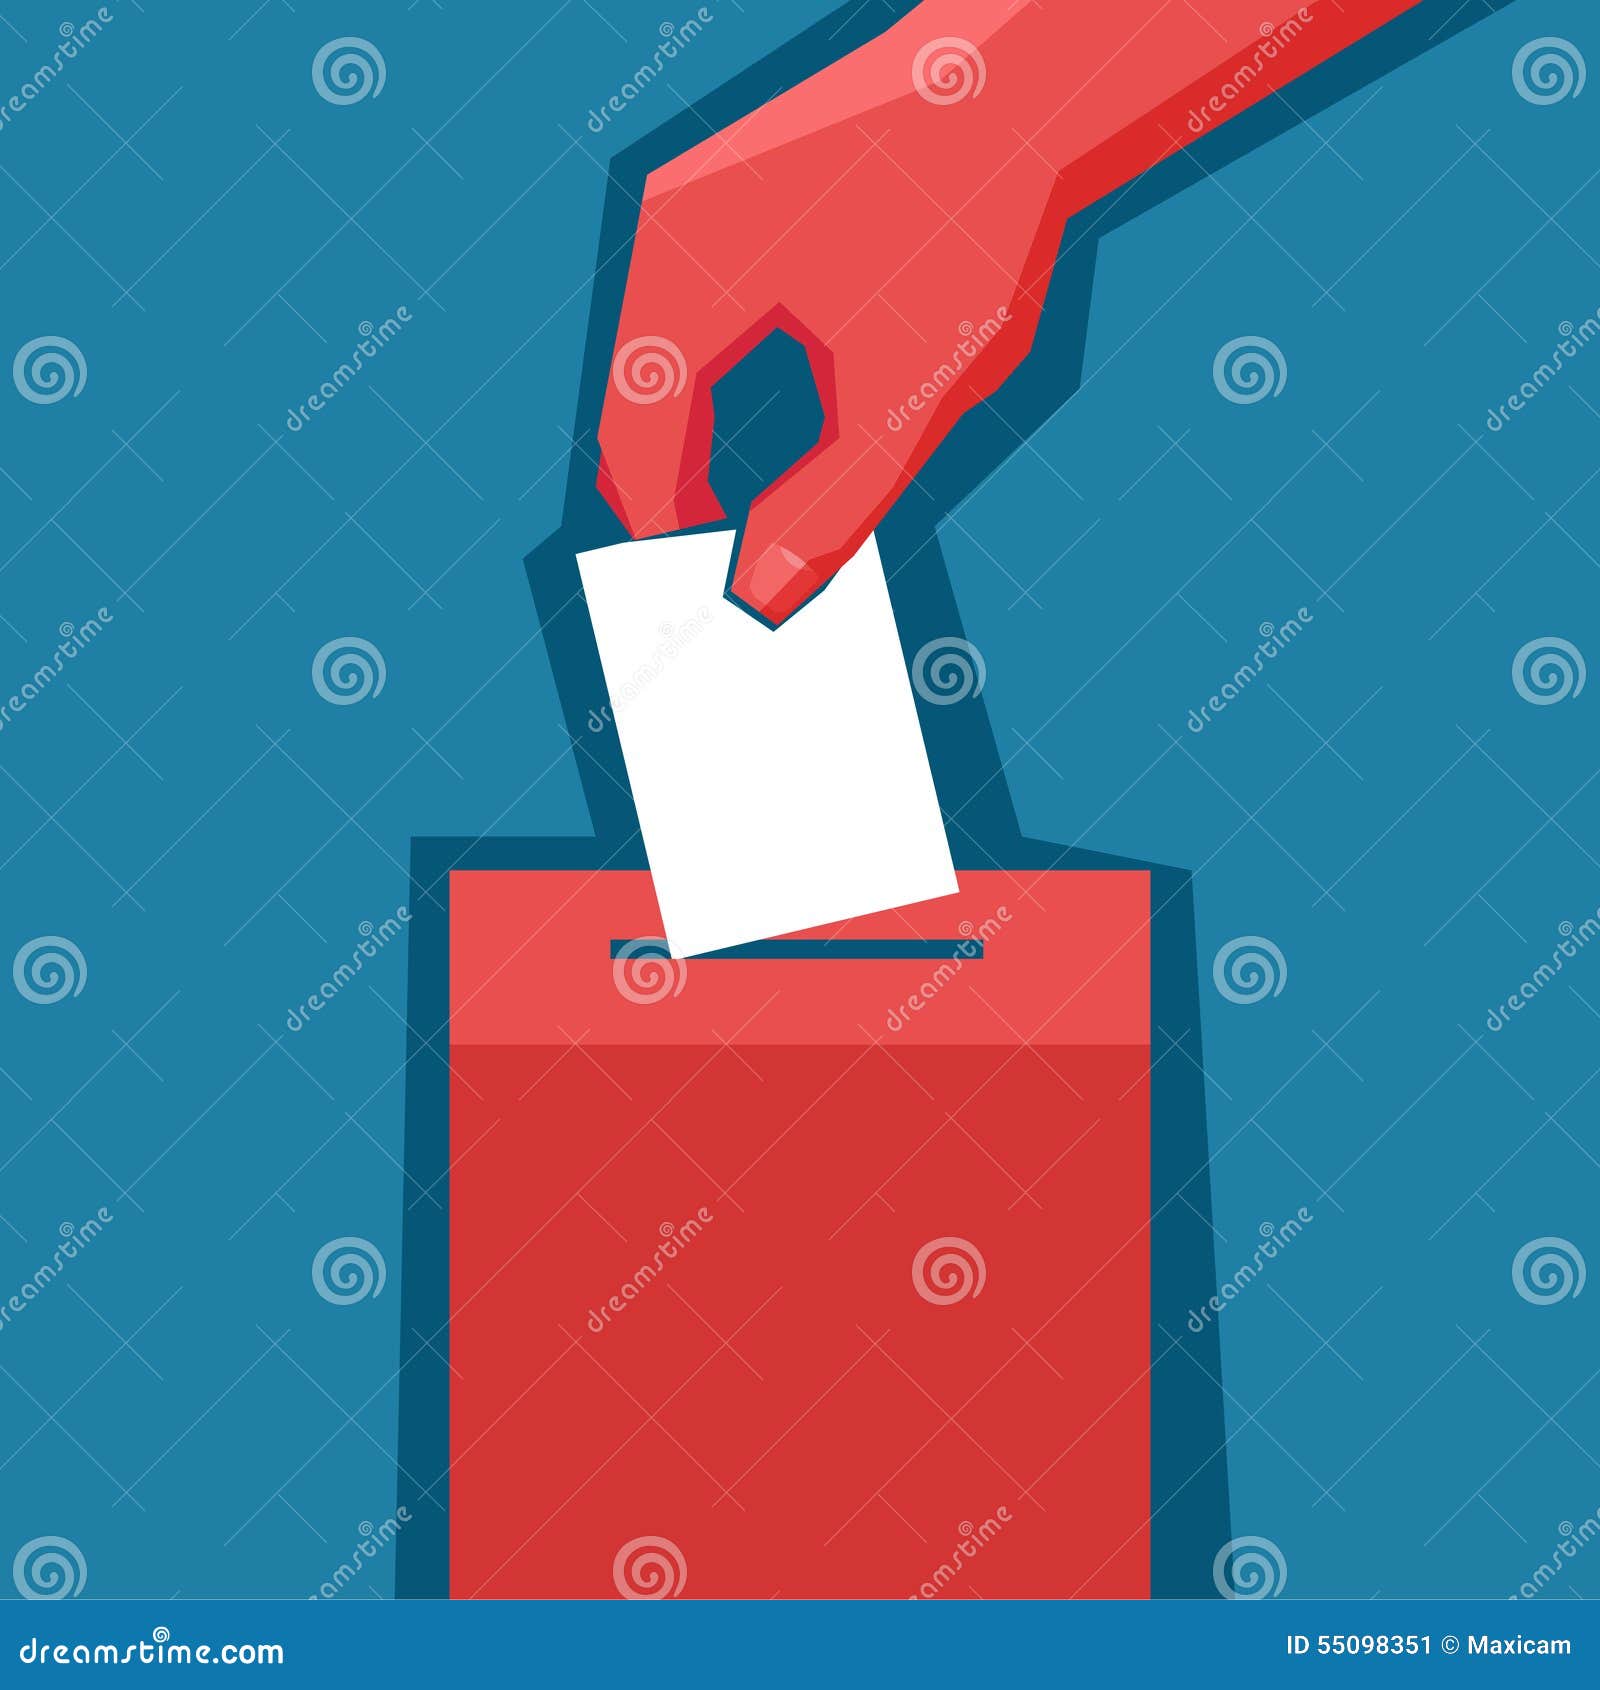 hand puts ballot in the ballot box